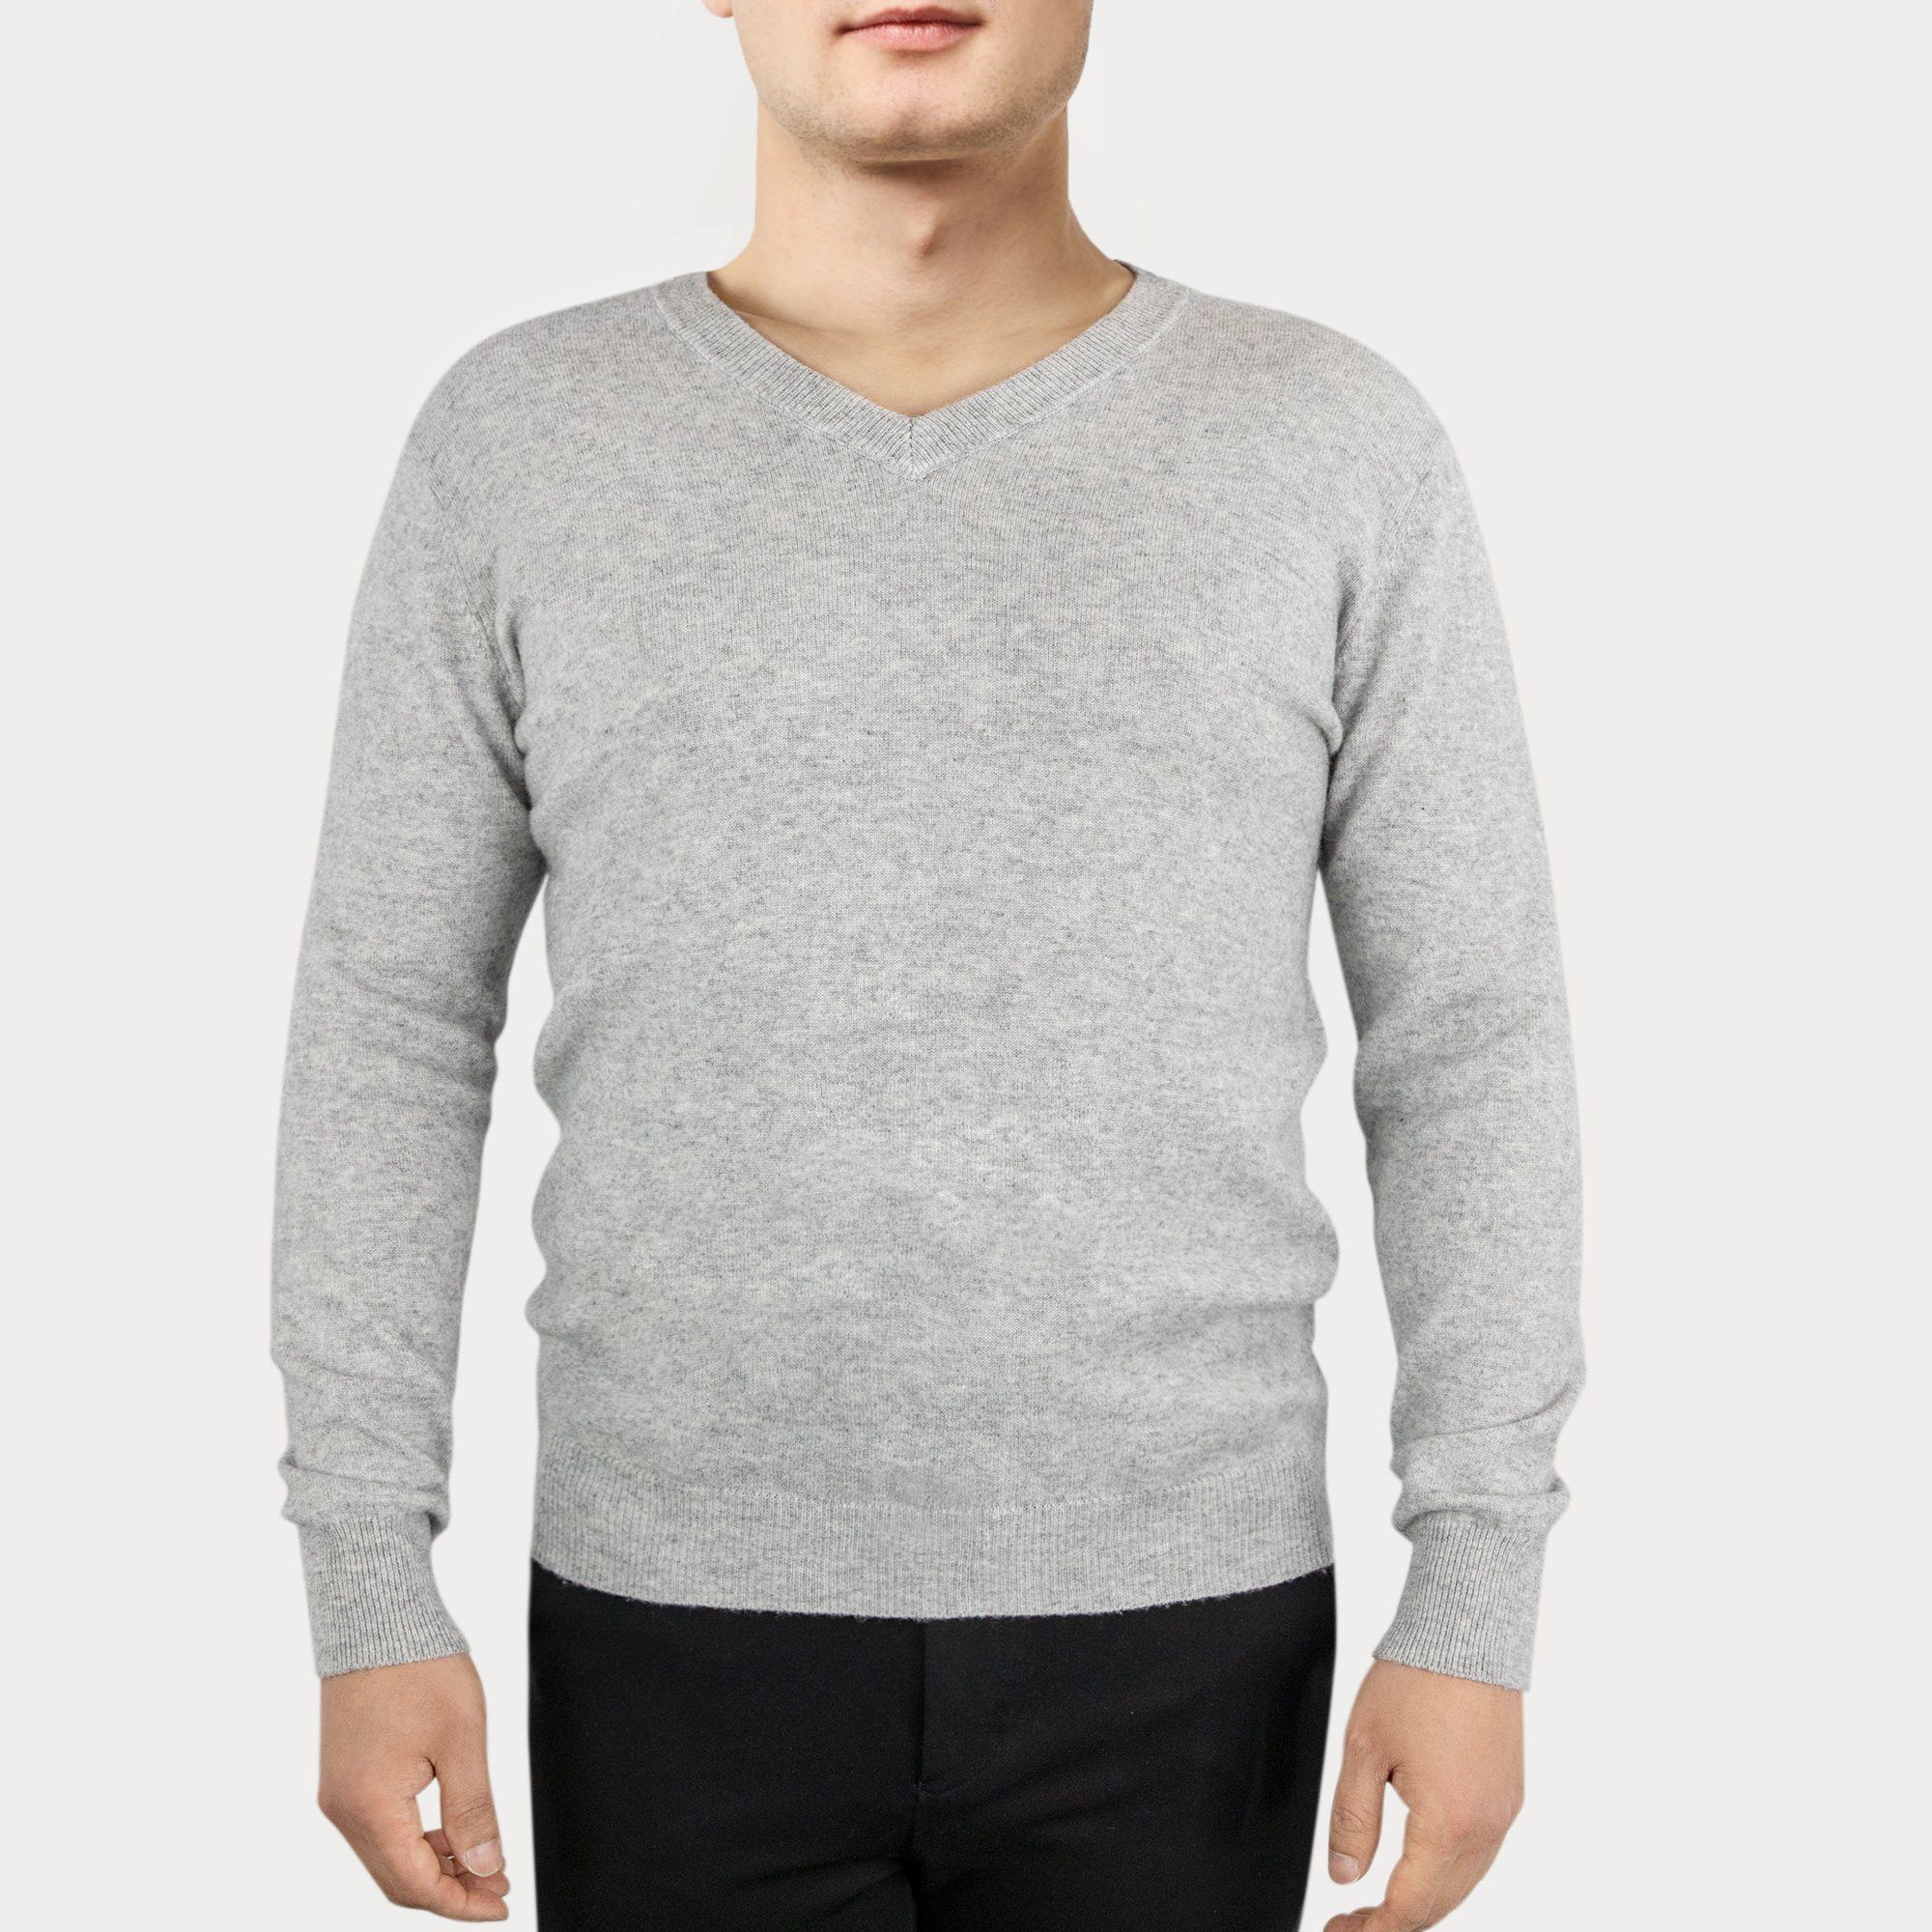 LEEZ Men V-neck Cashmere Sweater Gray